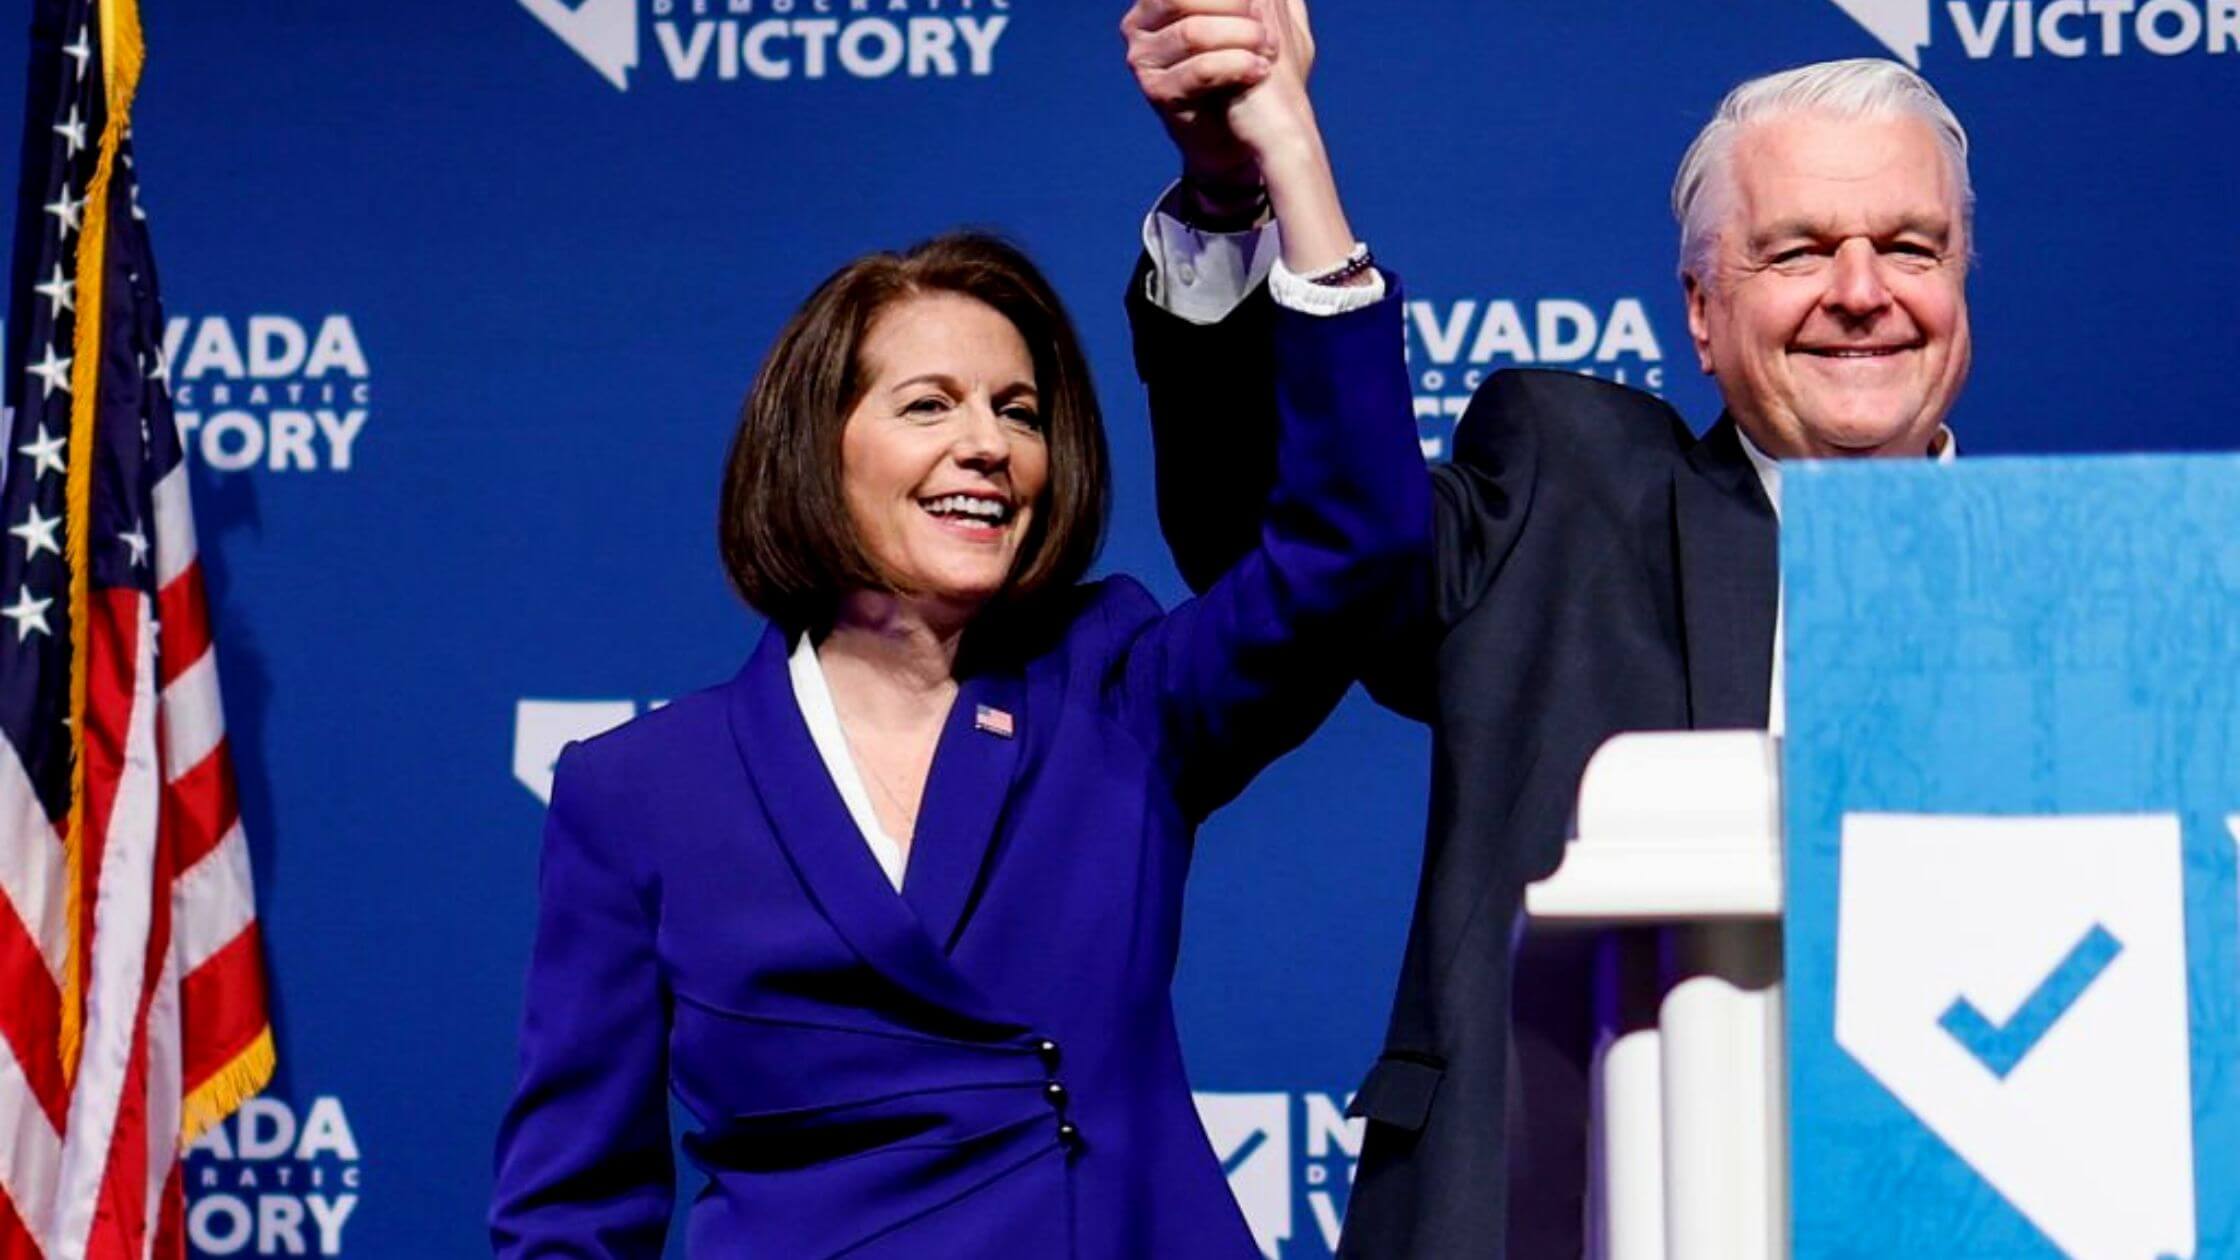 How Catherine Cortez Masto Won The Senate Election And The Nevada Seat